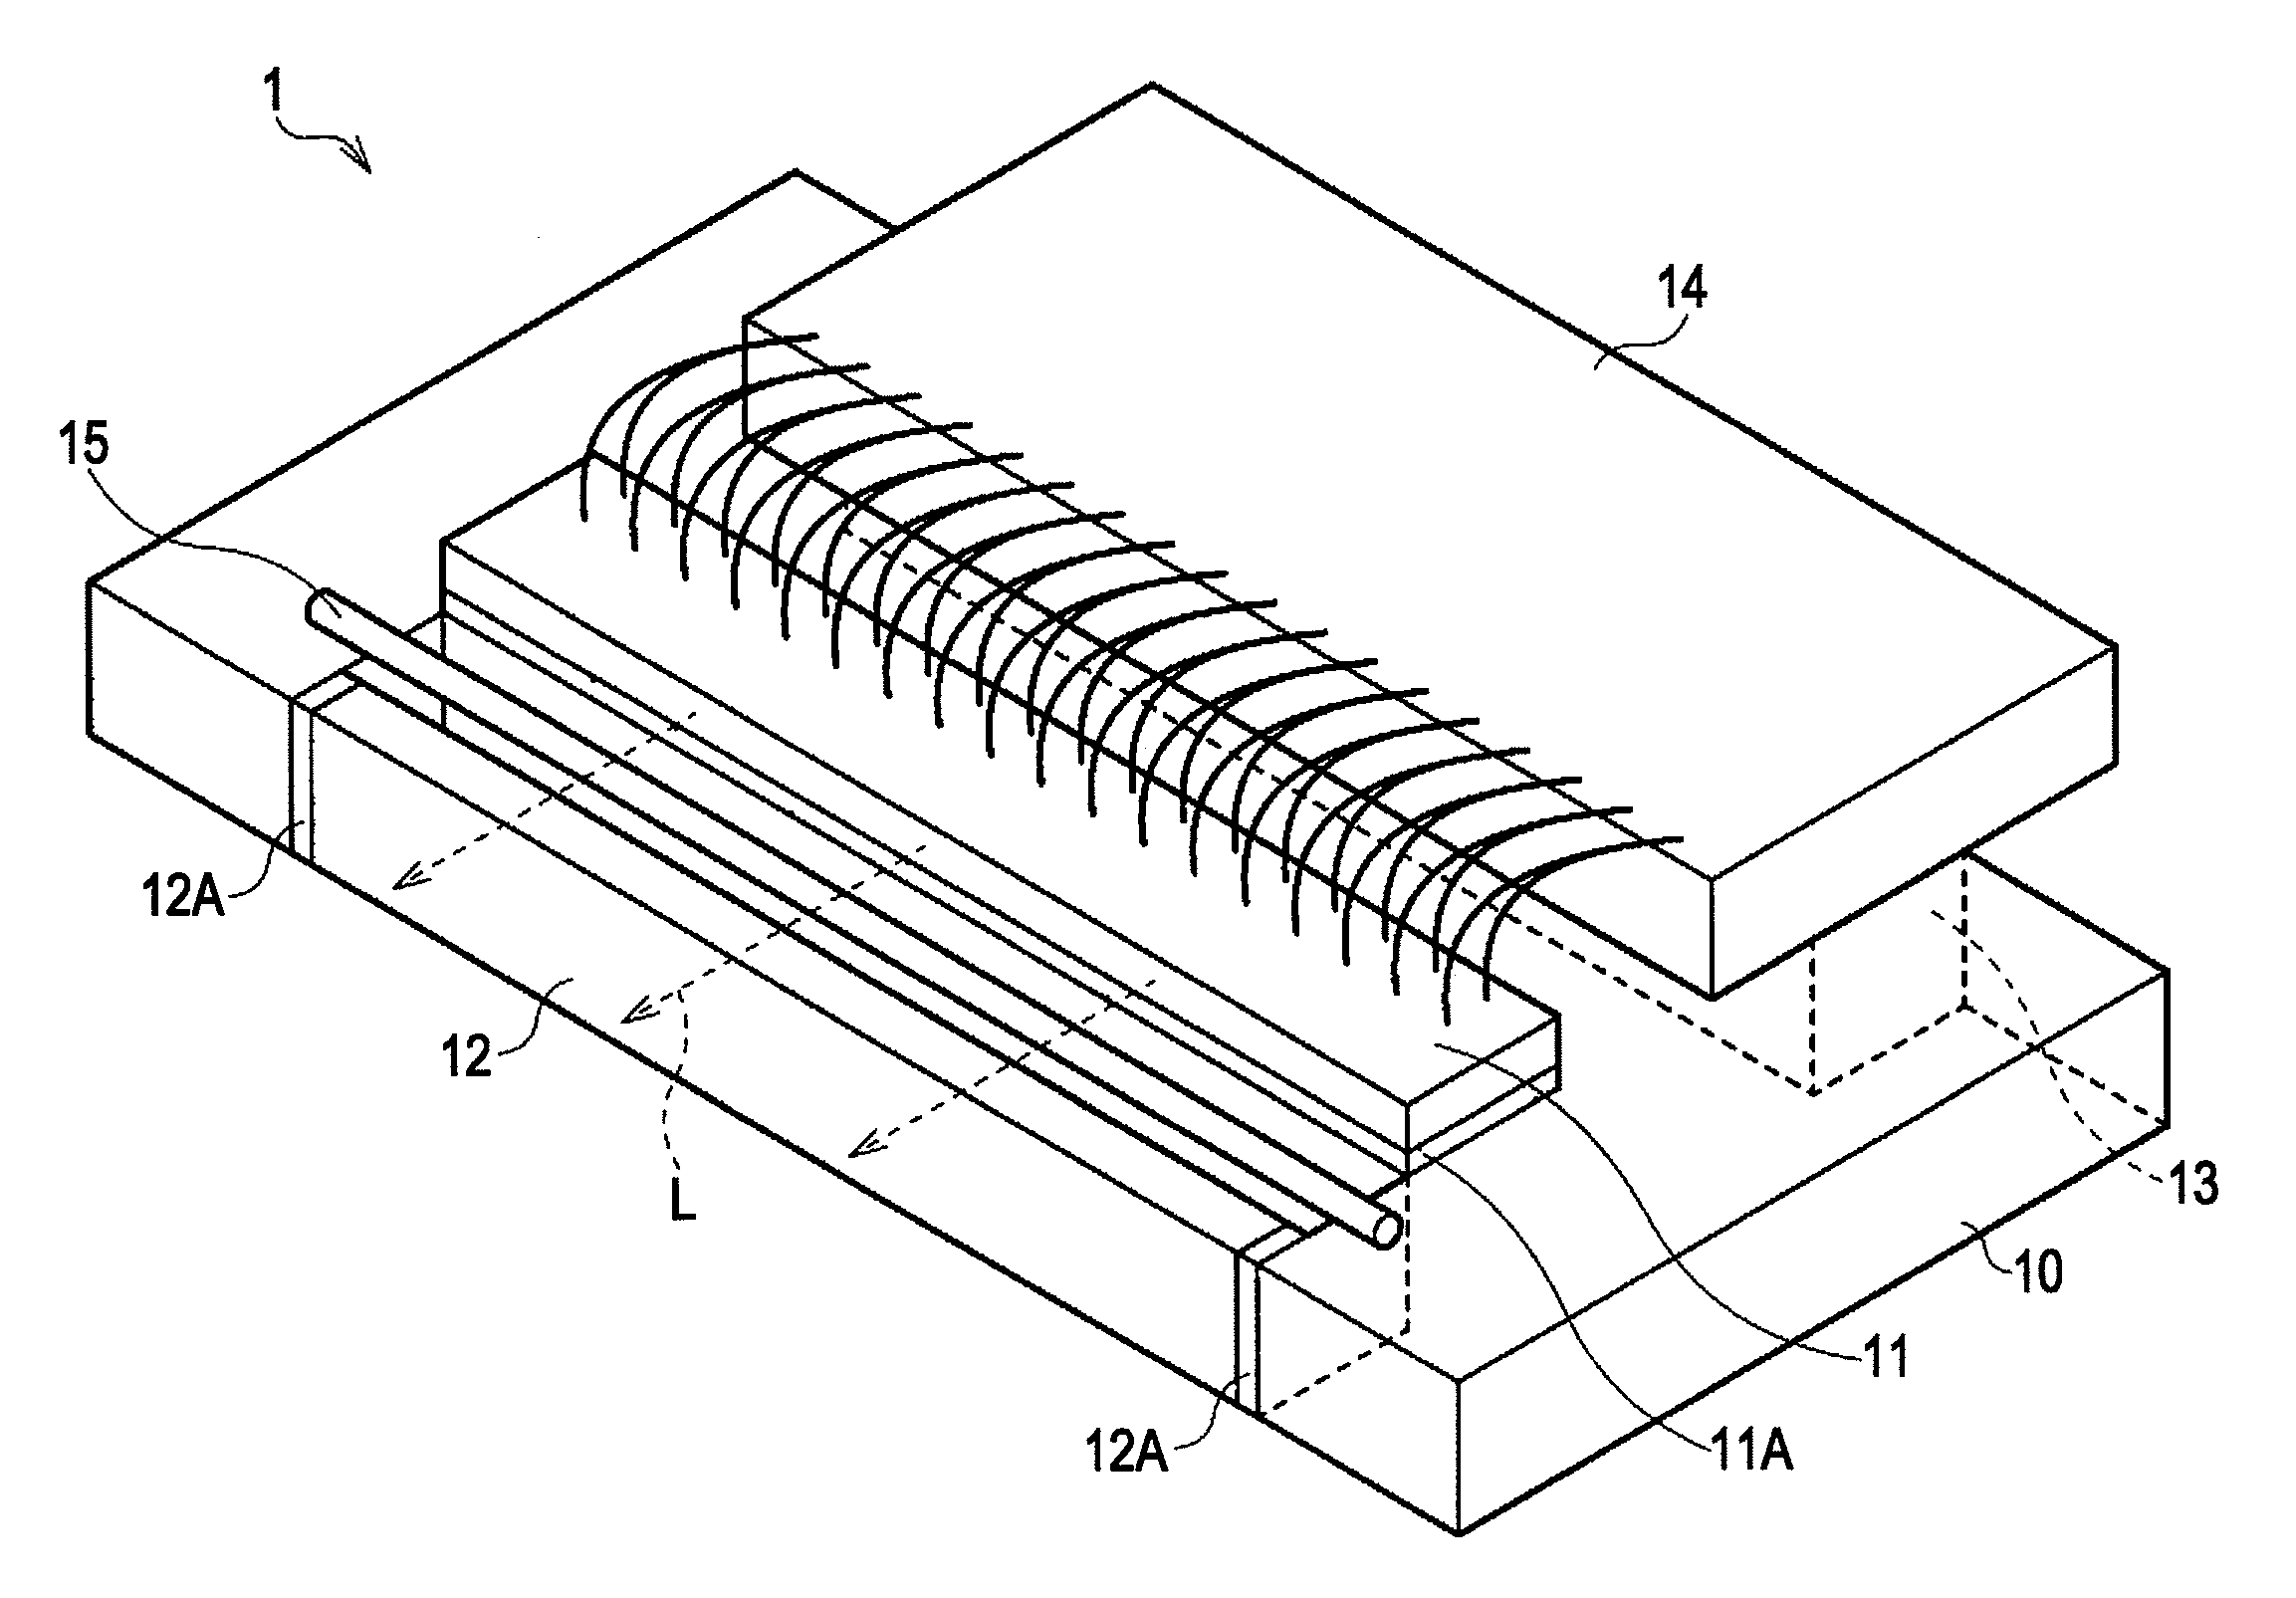 Semiconductor laser apparatus